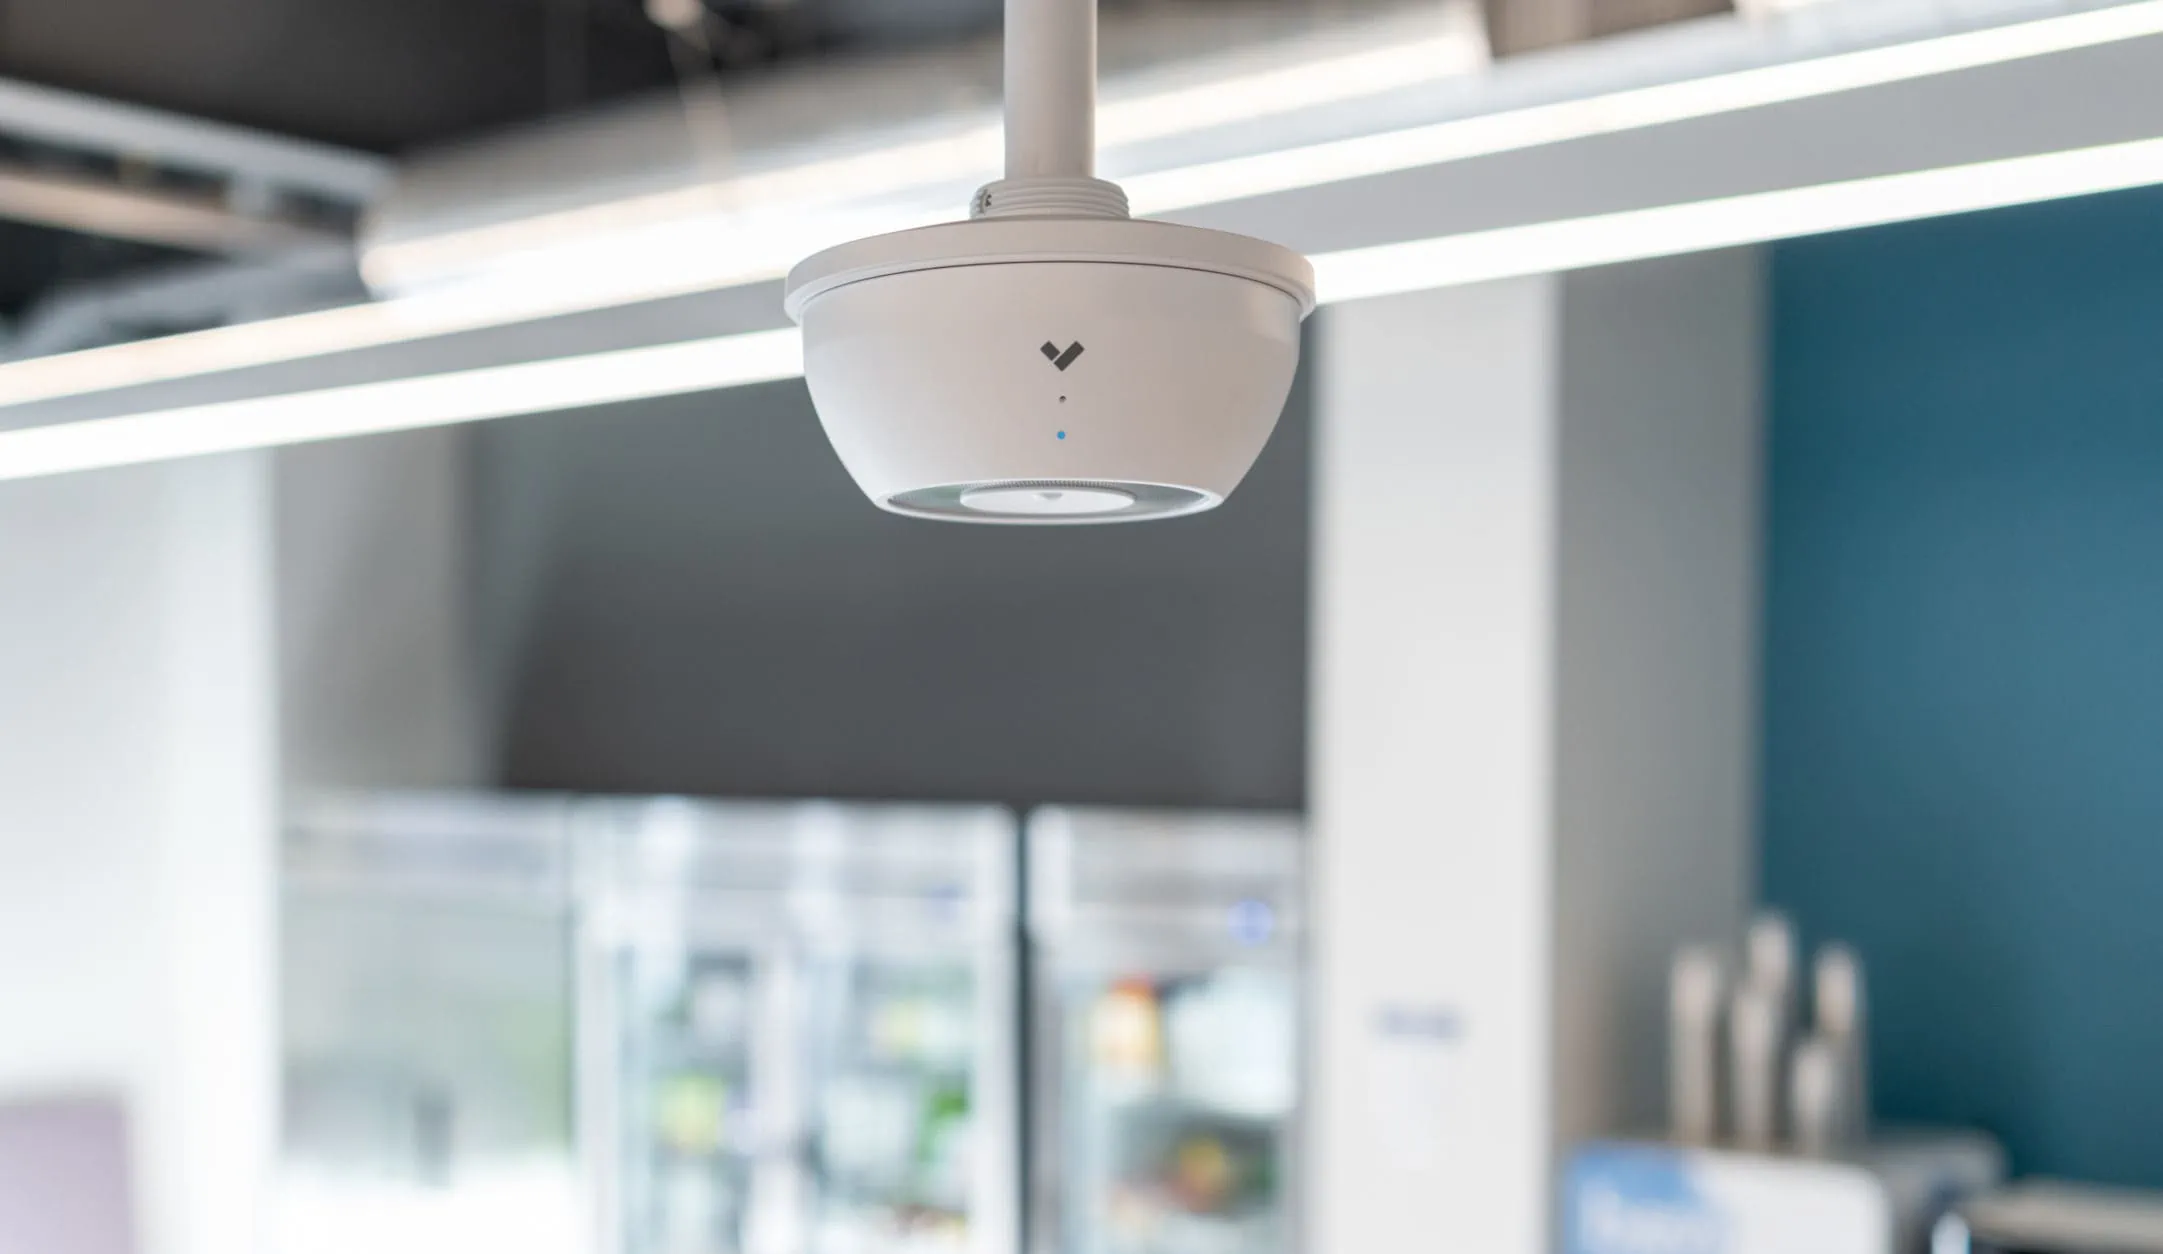 The Verkada SV11 Environmental Sensor mounted on a Tampa business’ ceiling